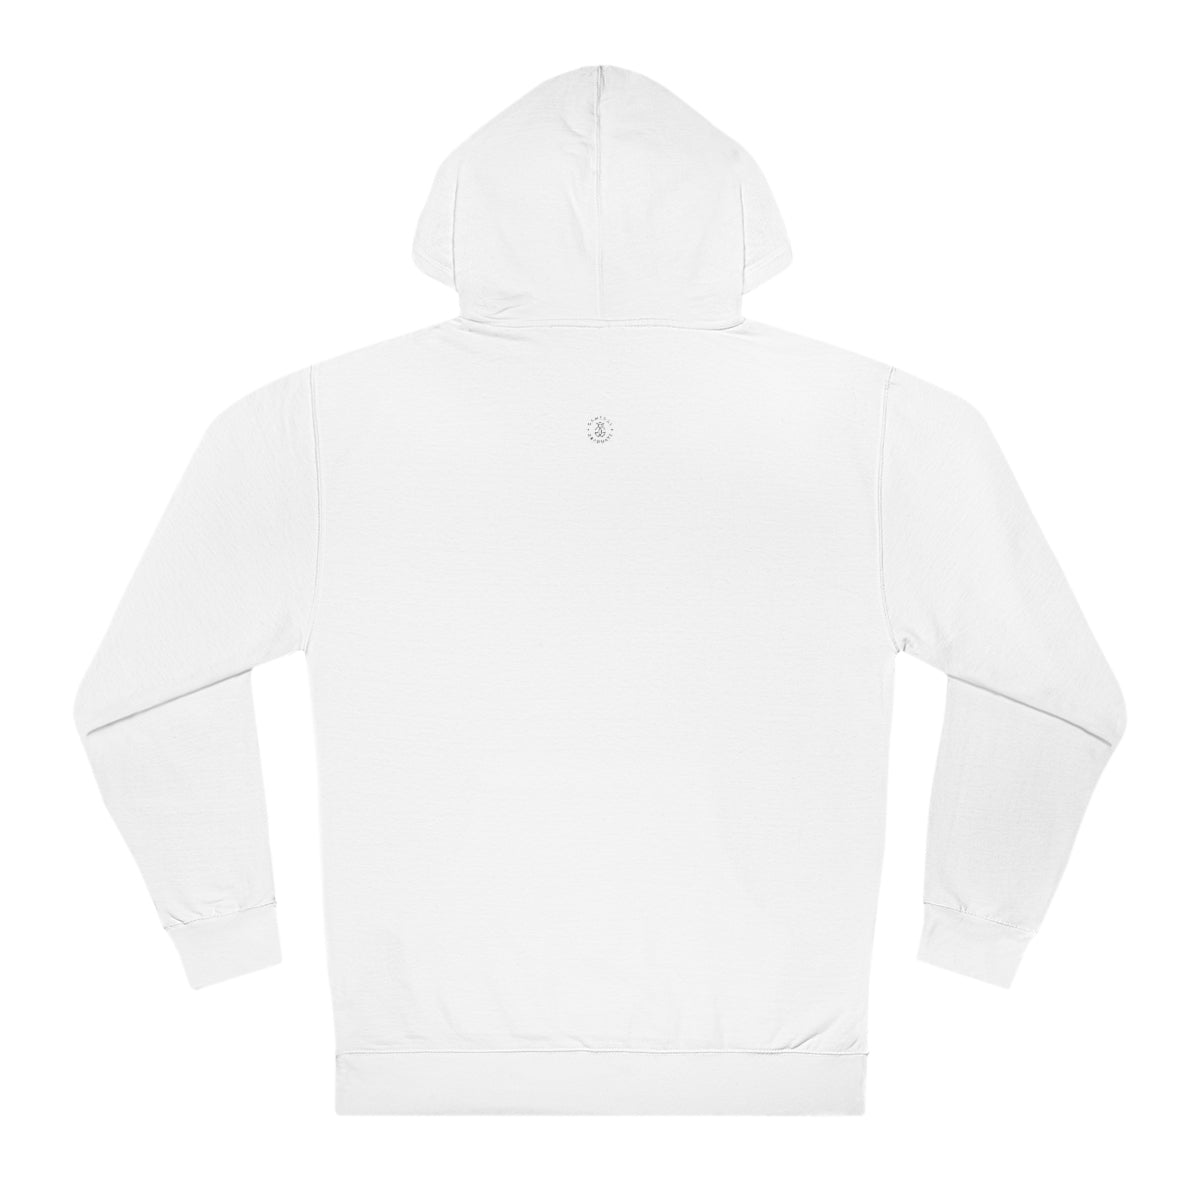 Wake Forest Hooded Sweatshirt - GG - ITC